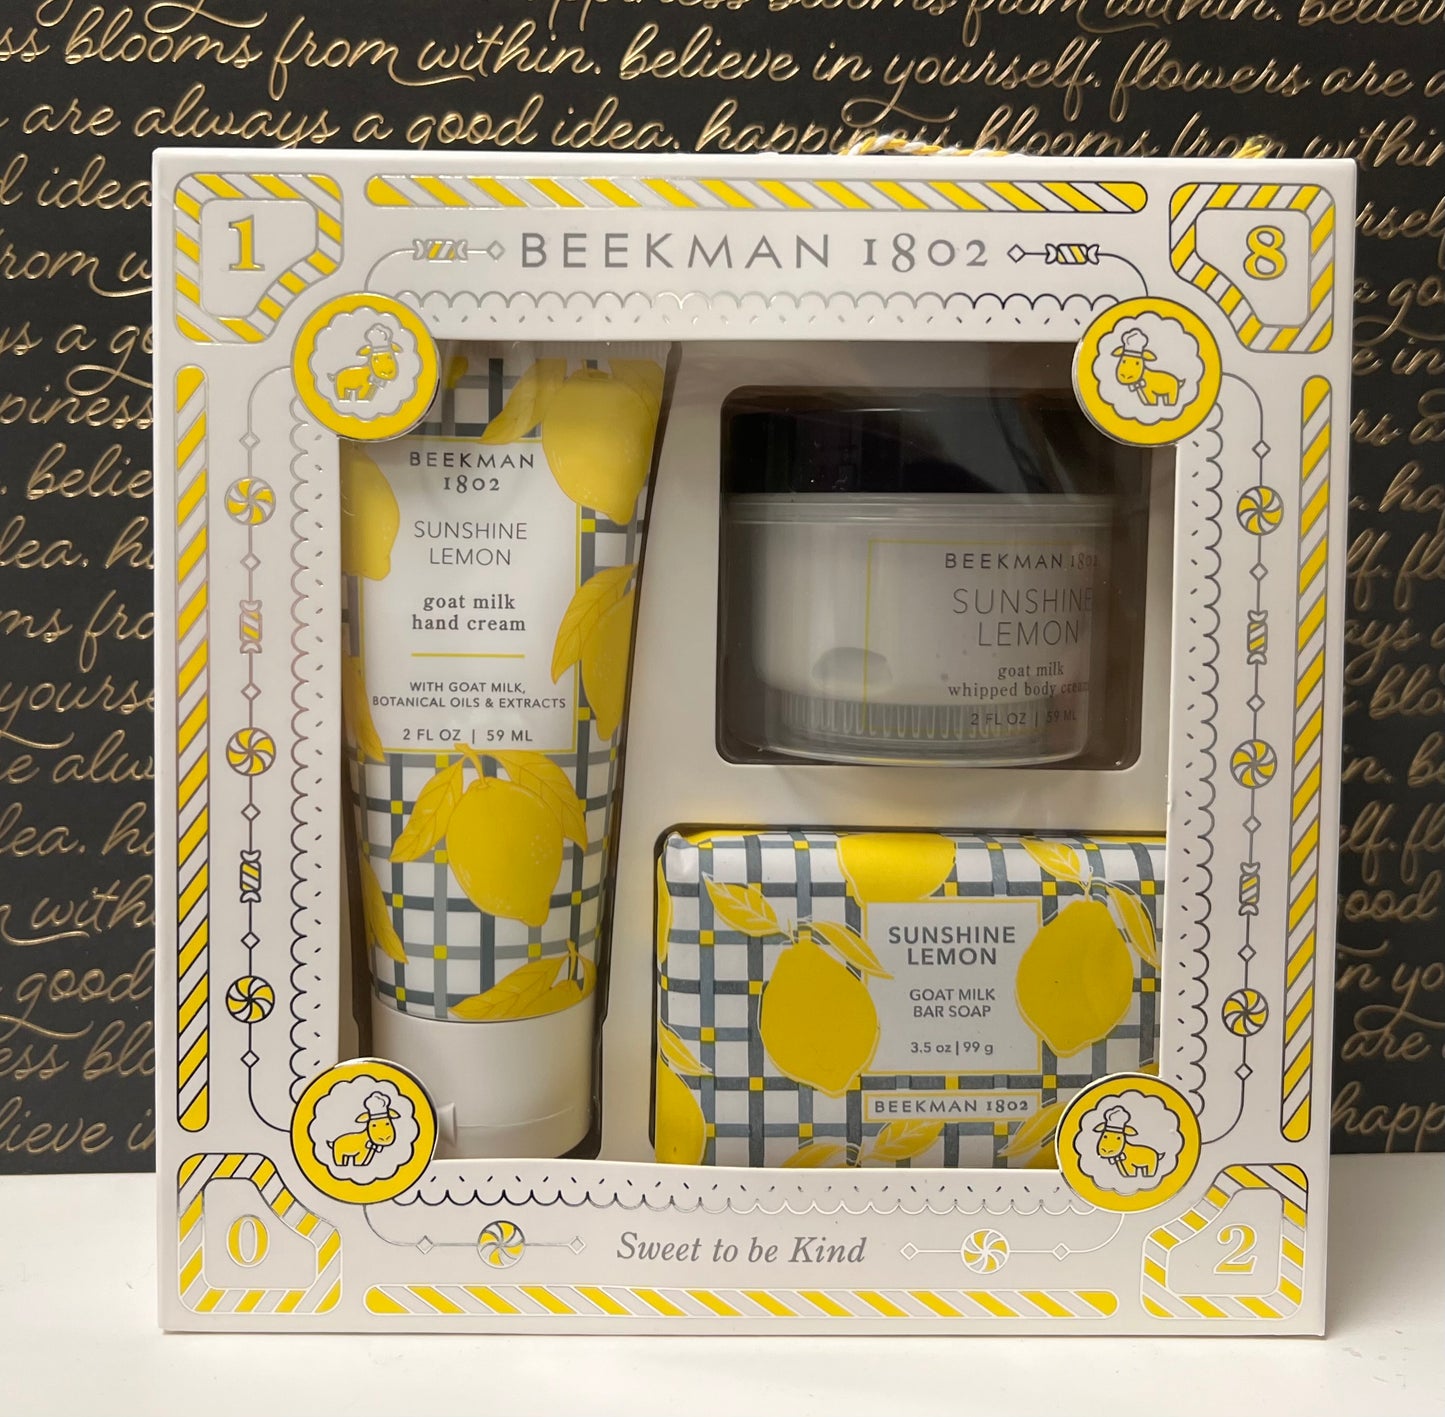 BEEKMAN 1802 Sunshine Lemon Gift Set, Hand Cream, Whipped Body Cream, Soap